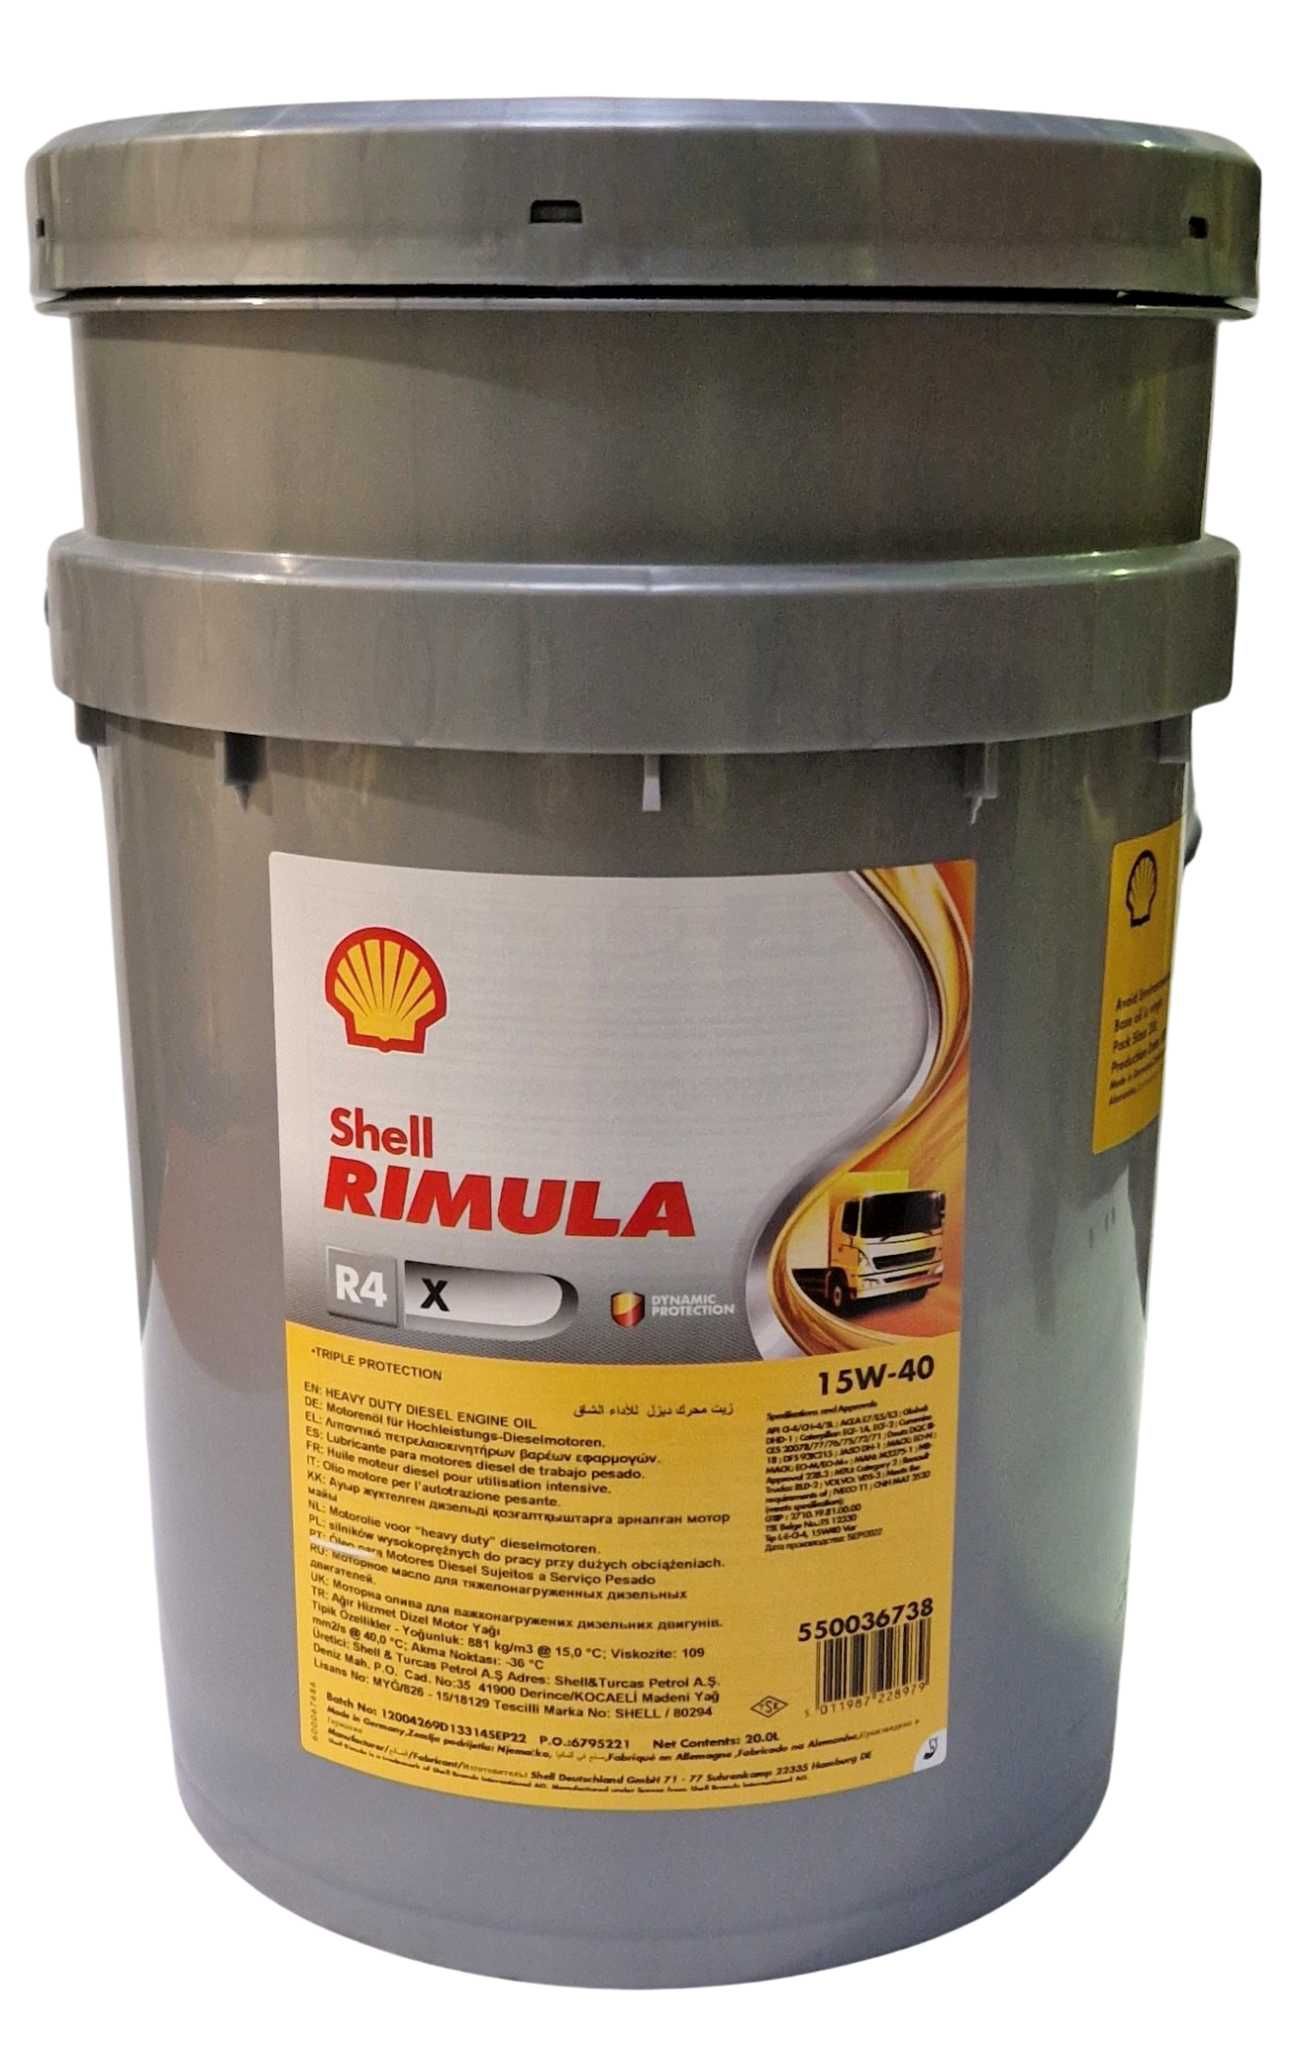 Shell Rimula R4 X 15W-40 20 Liter